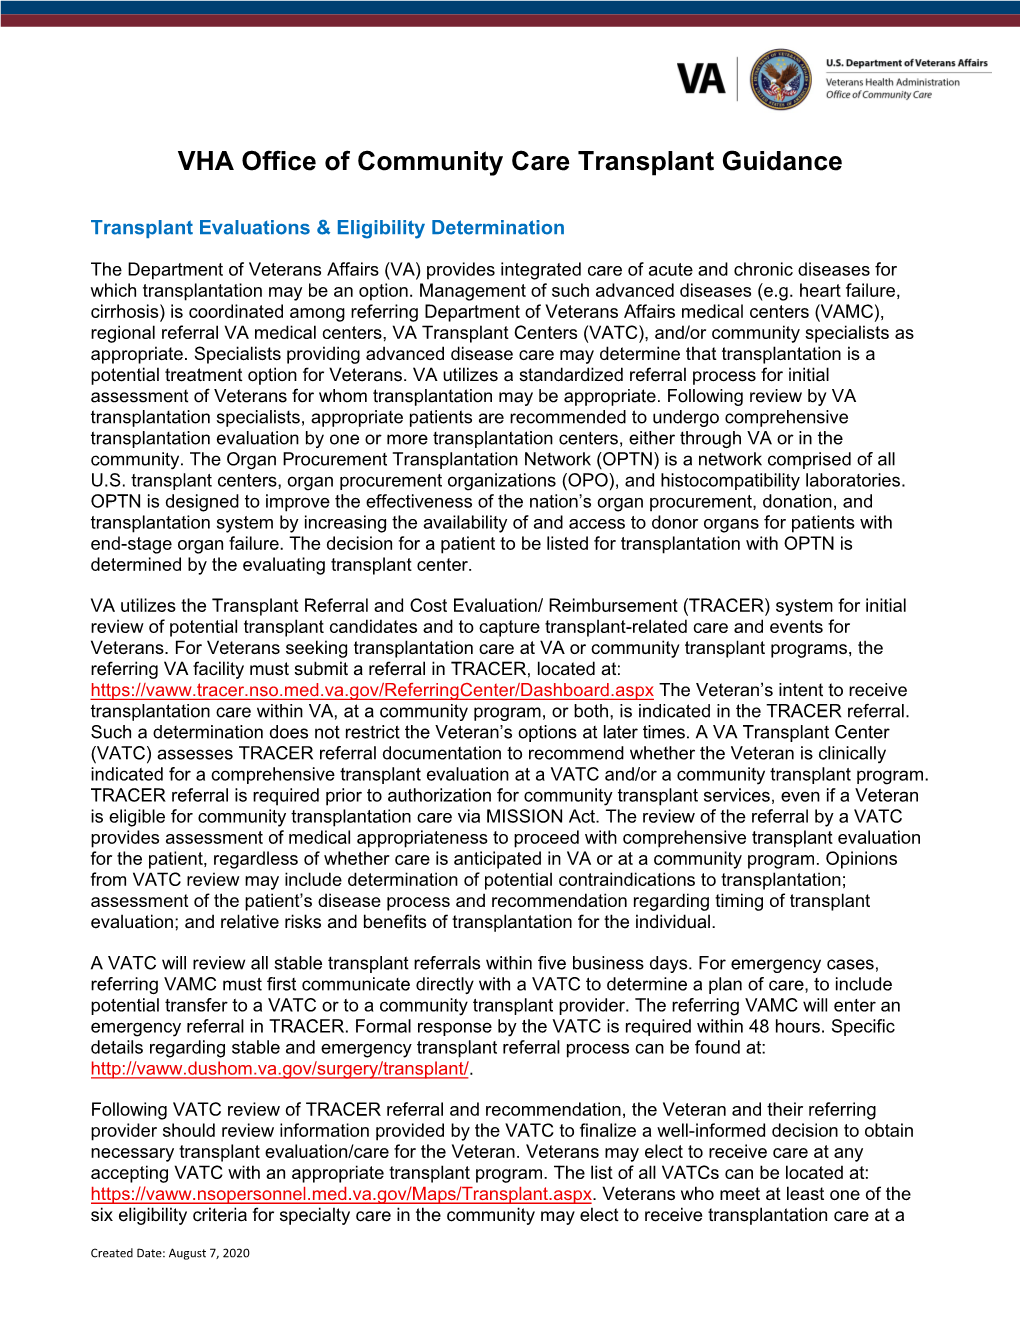 VHA Office of Community Care Transplant Guidance